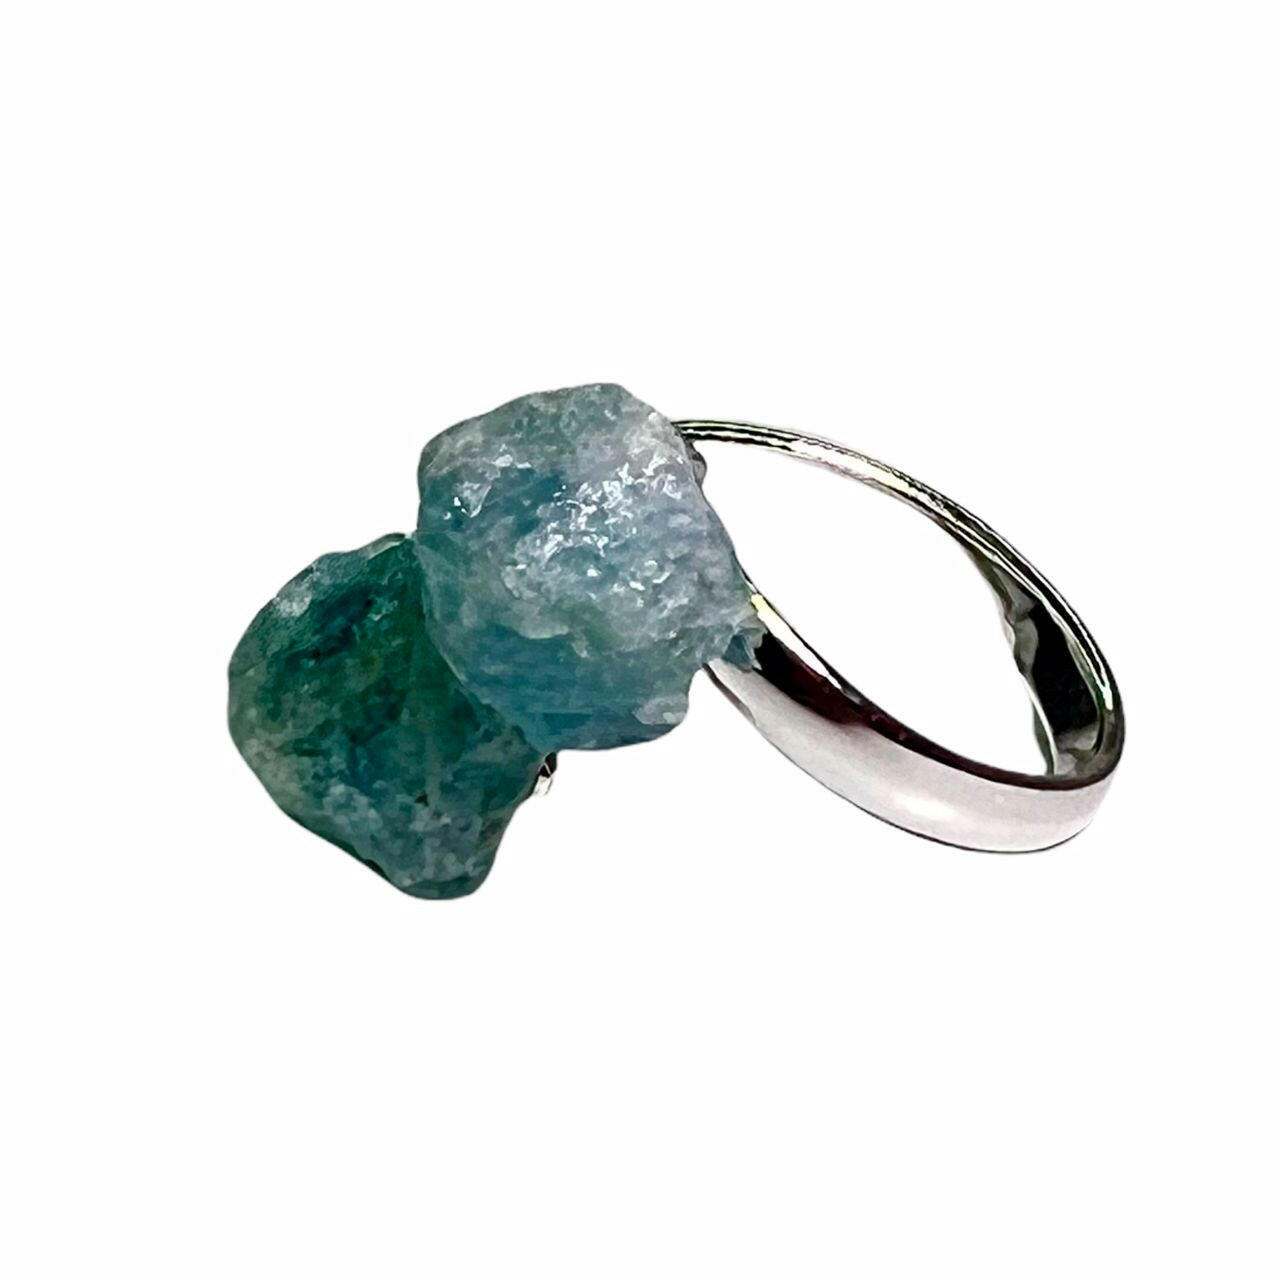 Beautiful Aquamarine Ring - Size 9 - Cast a Stone